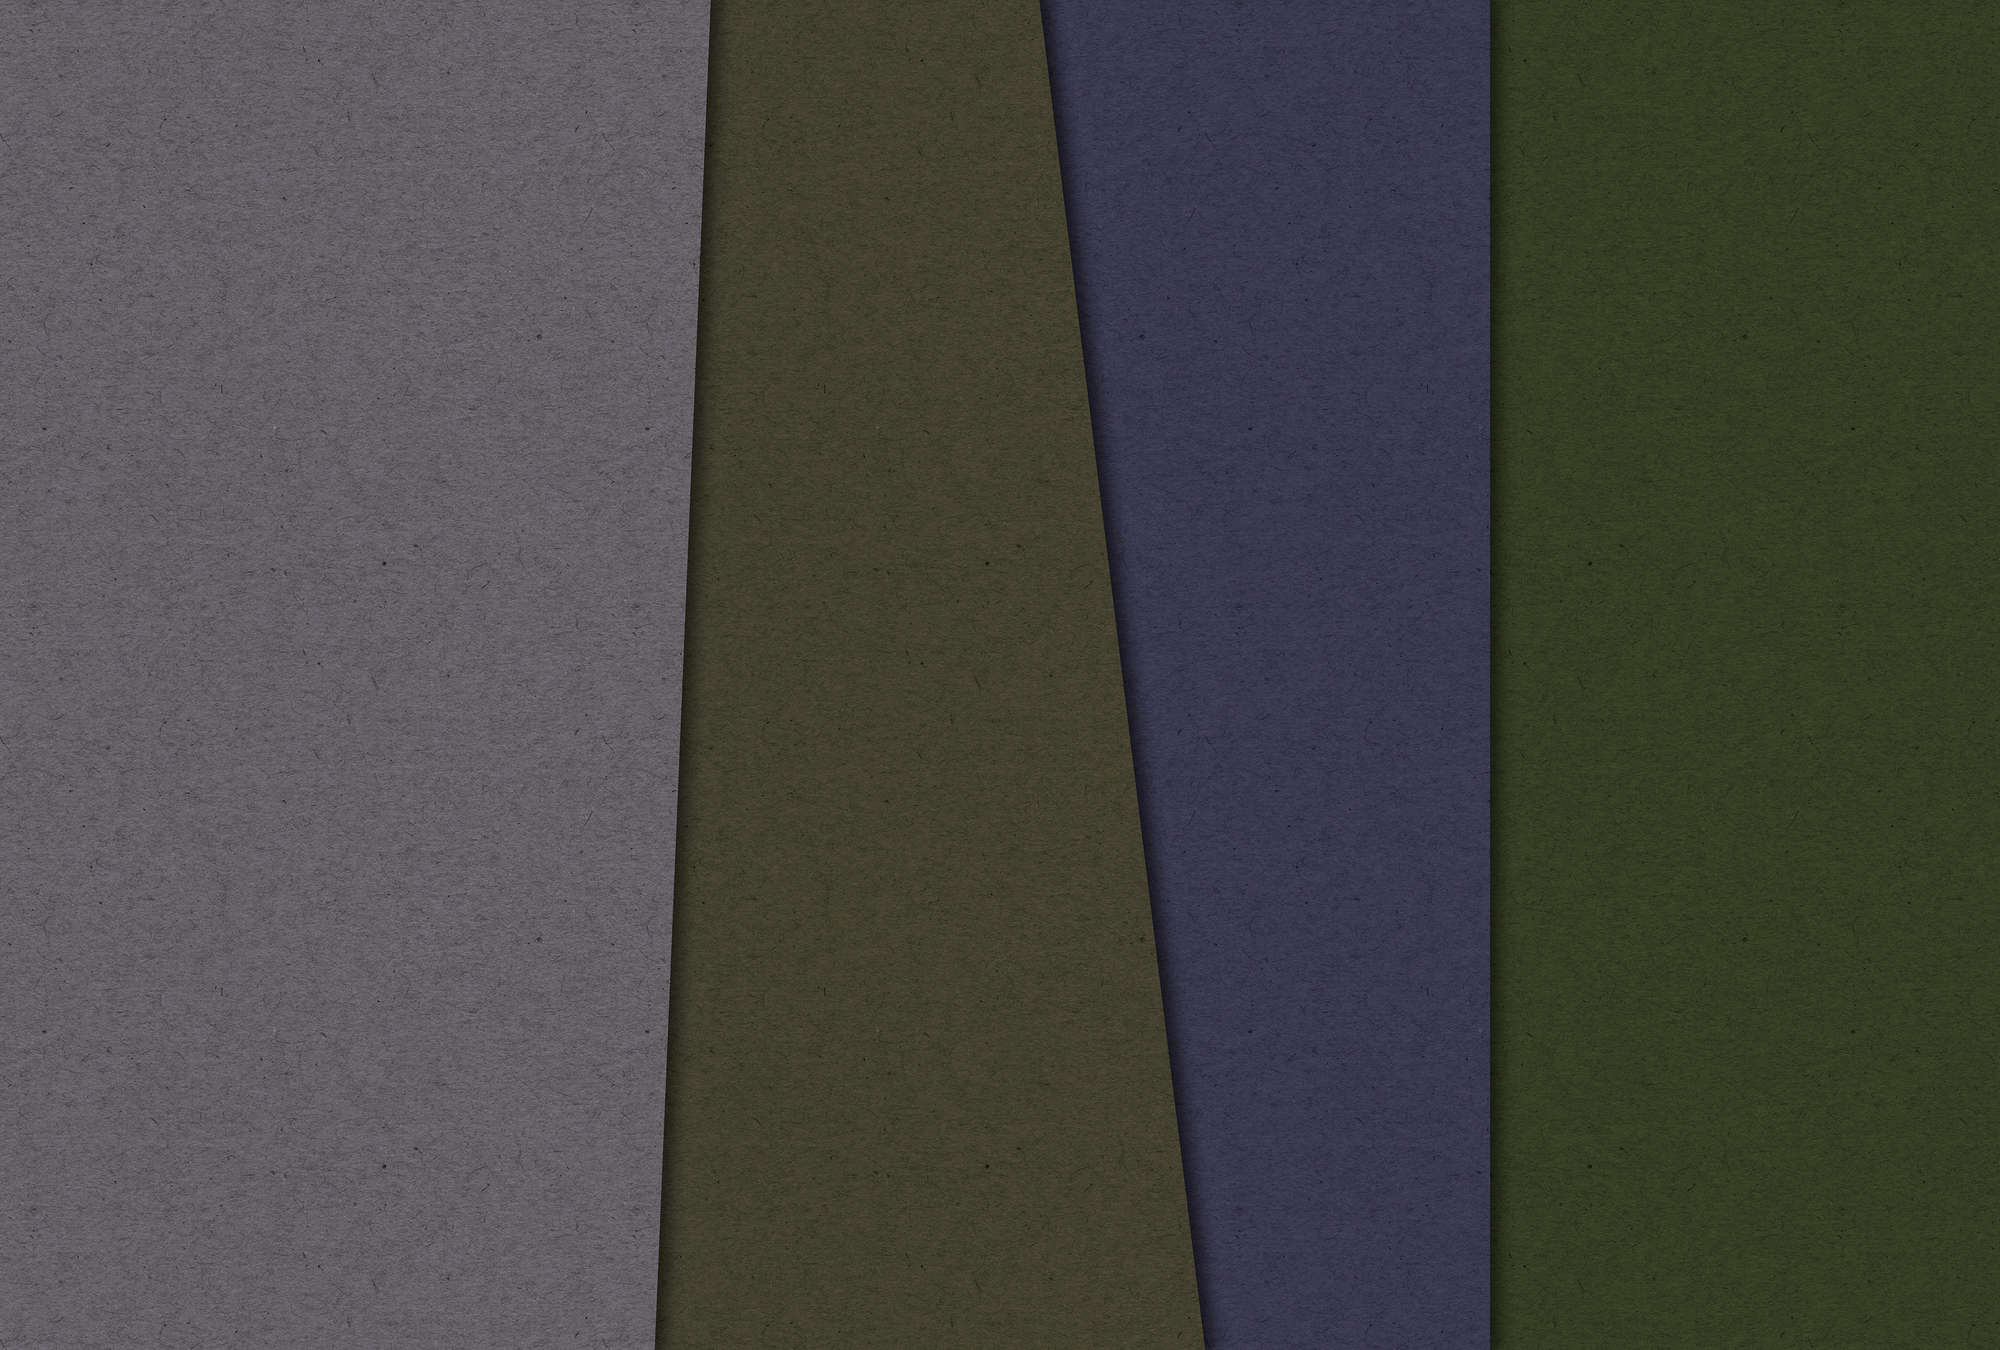             Layered Cardboard 3 - Photo wallpaper minimalist & abstract- cardboard structure - Green, Purple | Pearl smooth fleece
        